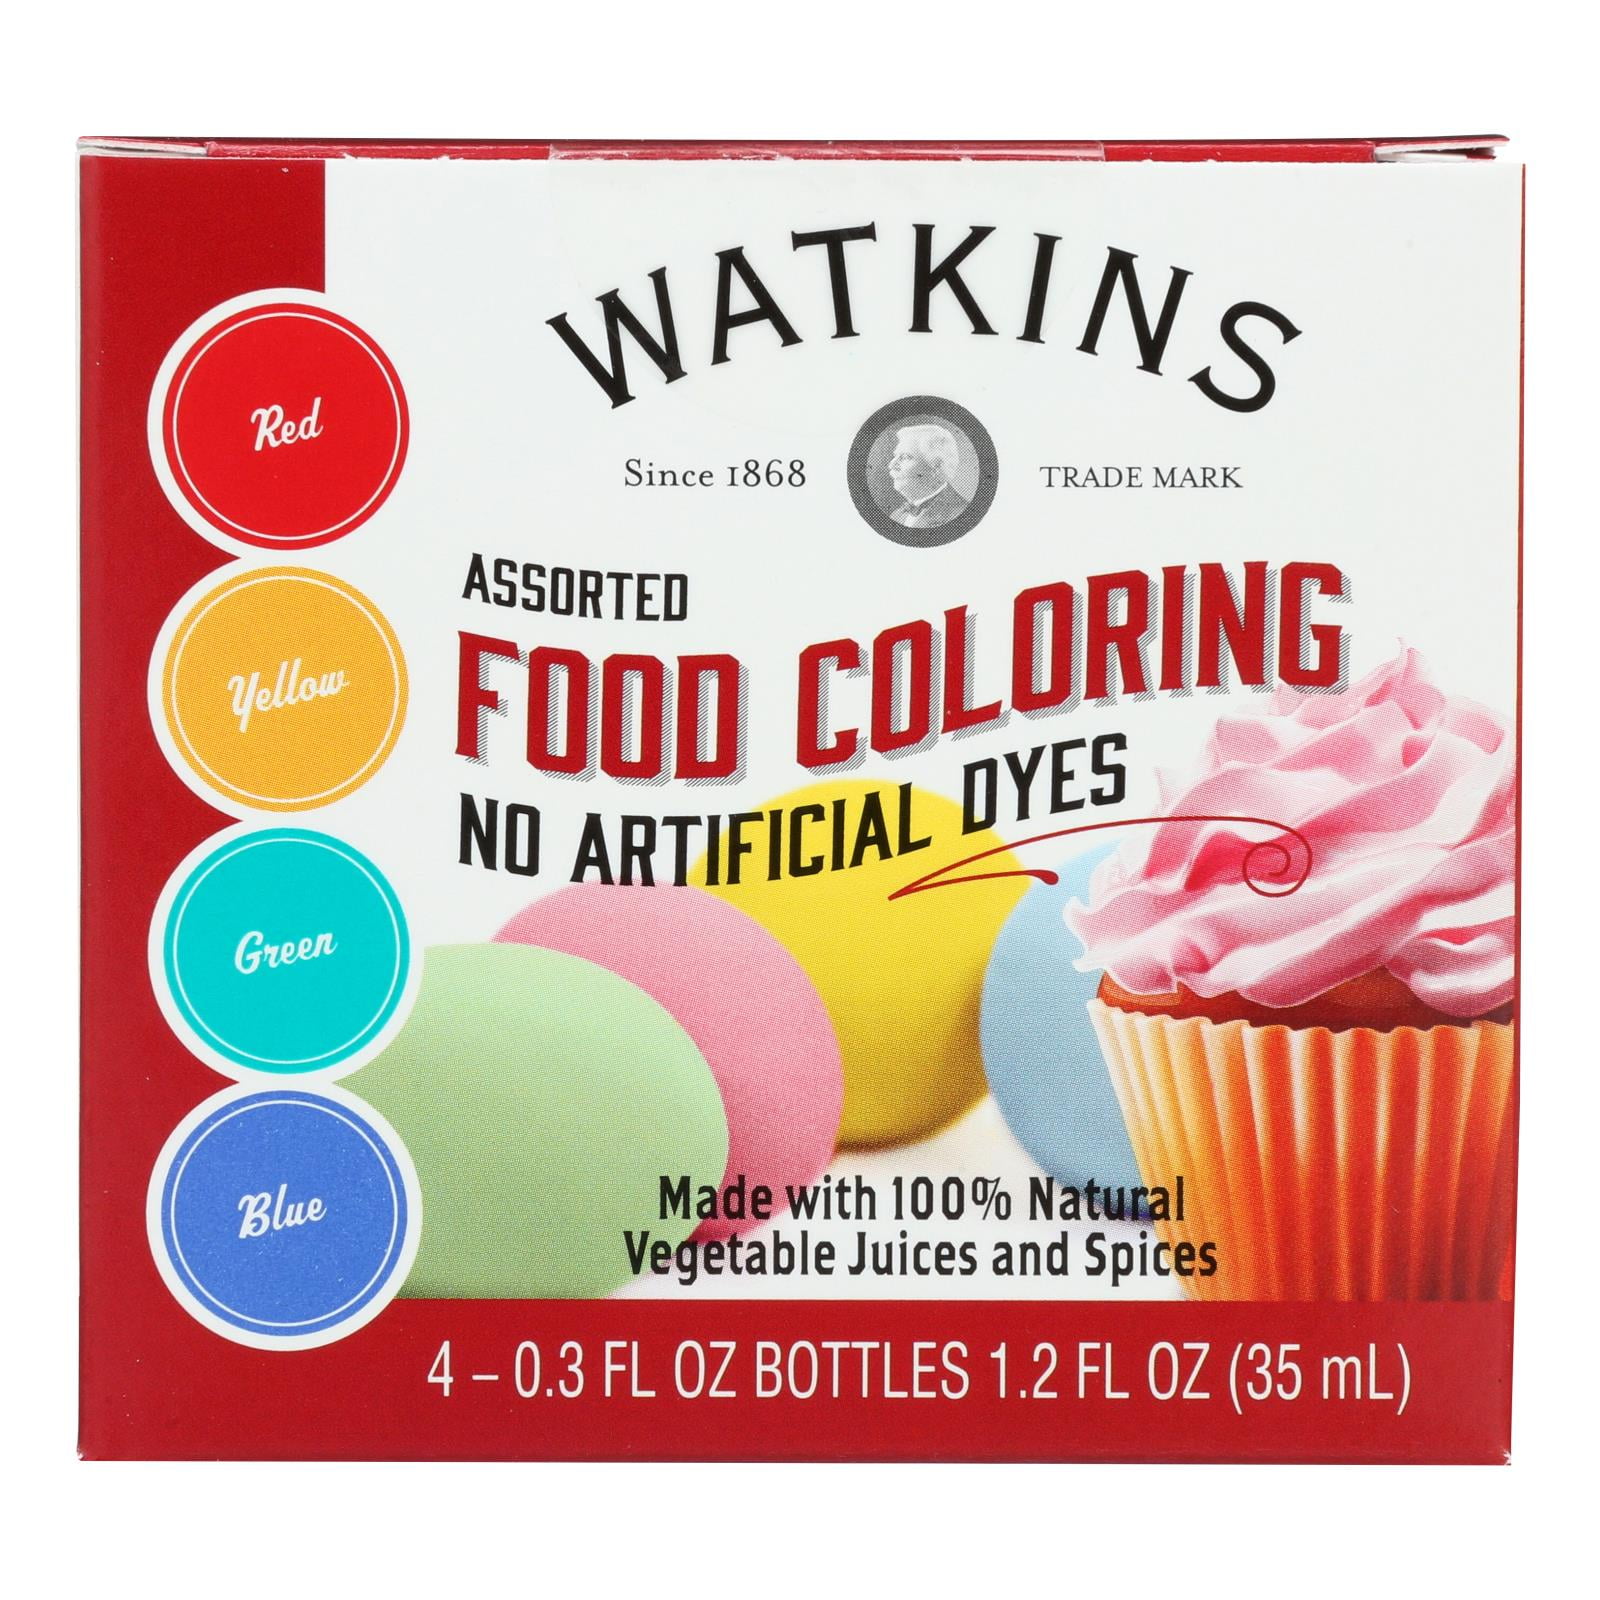 Target Food Coloring Review, Watkins Brand